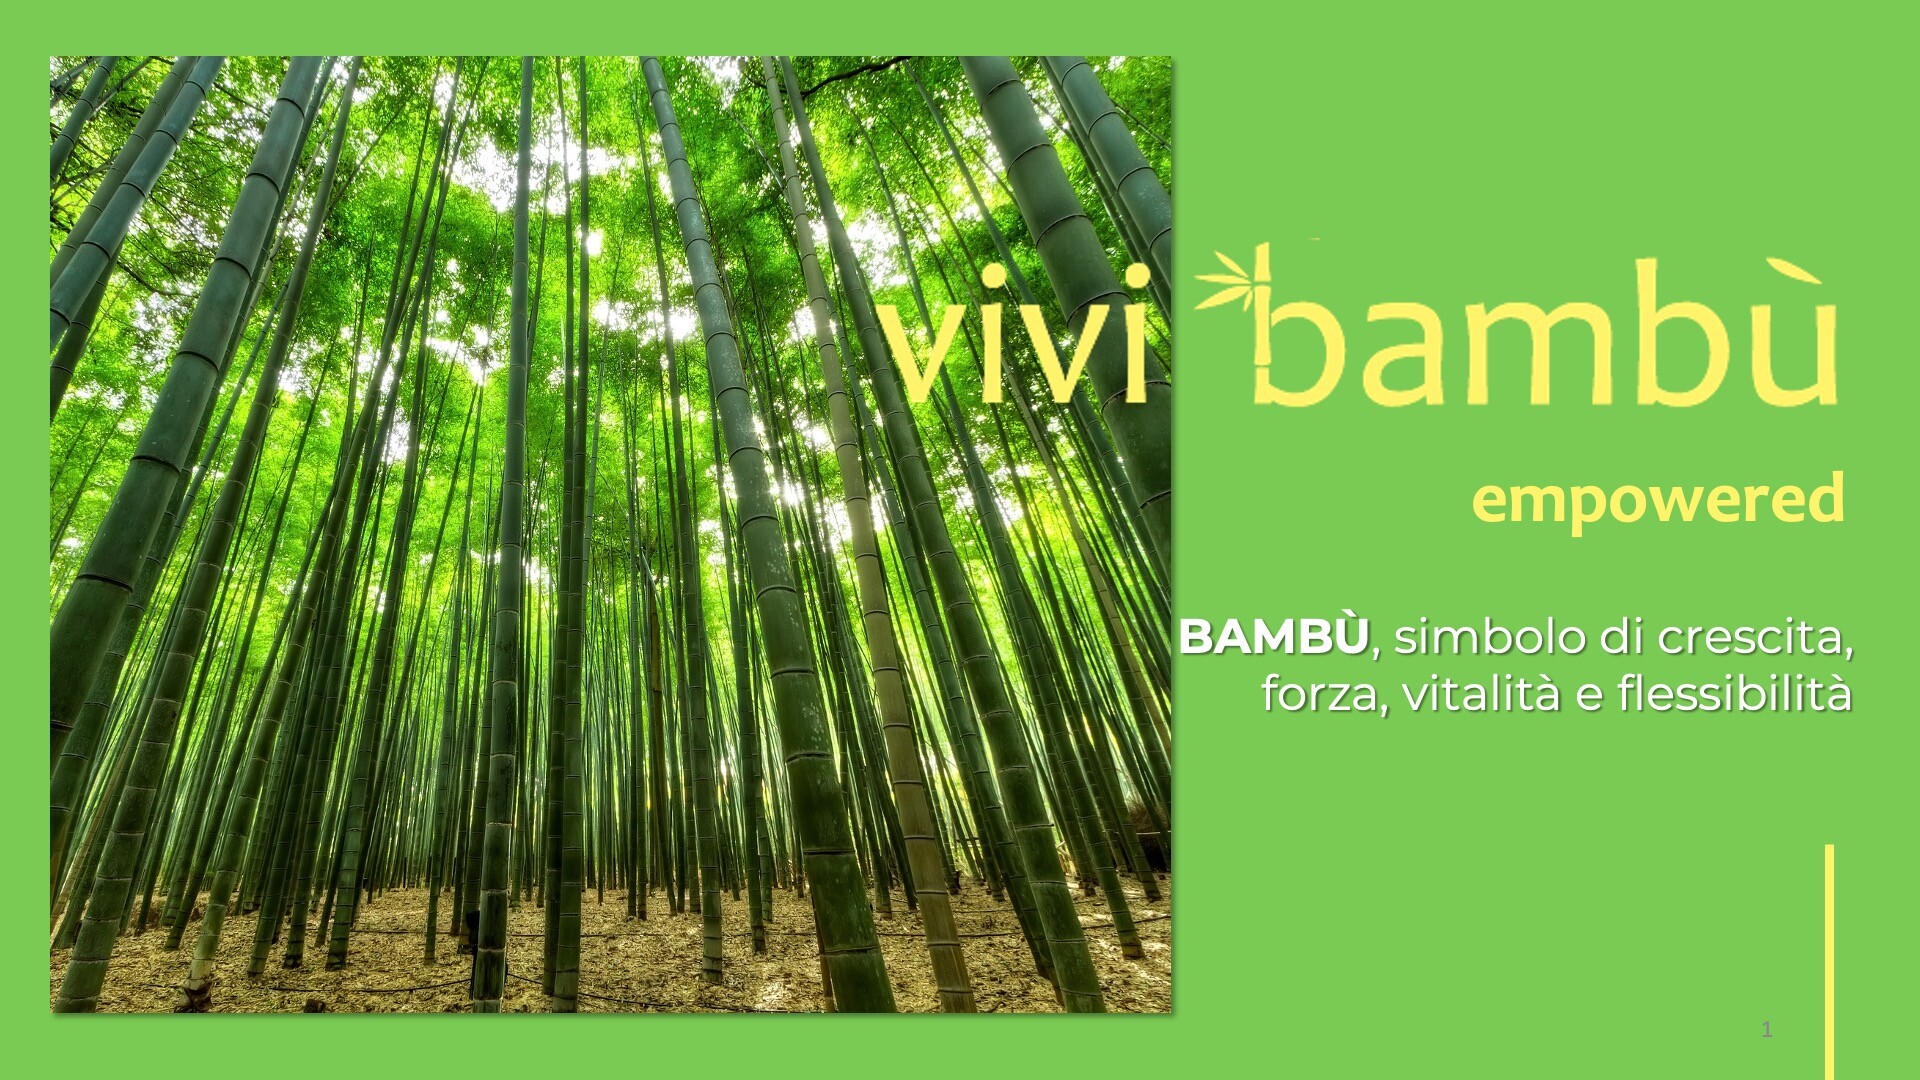 Bambù Gigante risorsa dai mille utilizzi